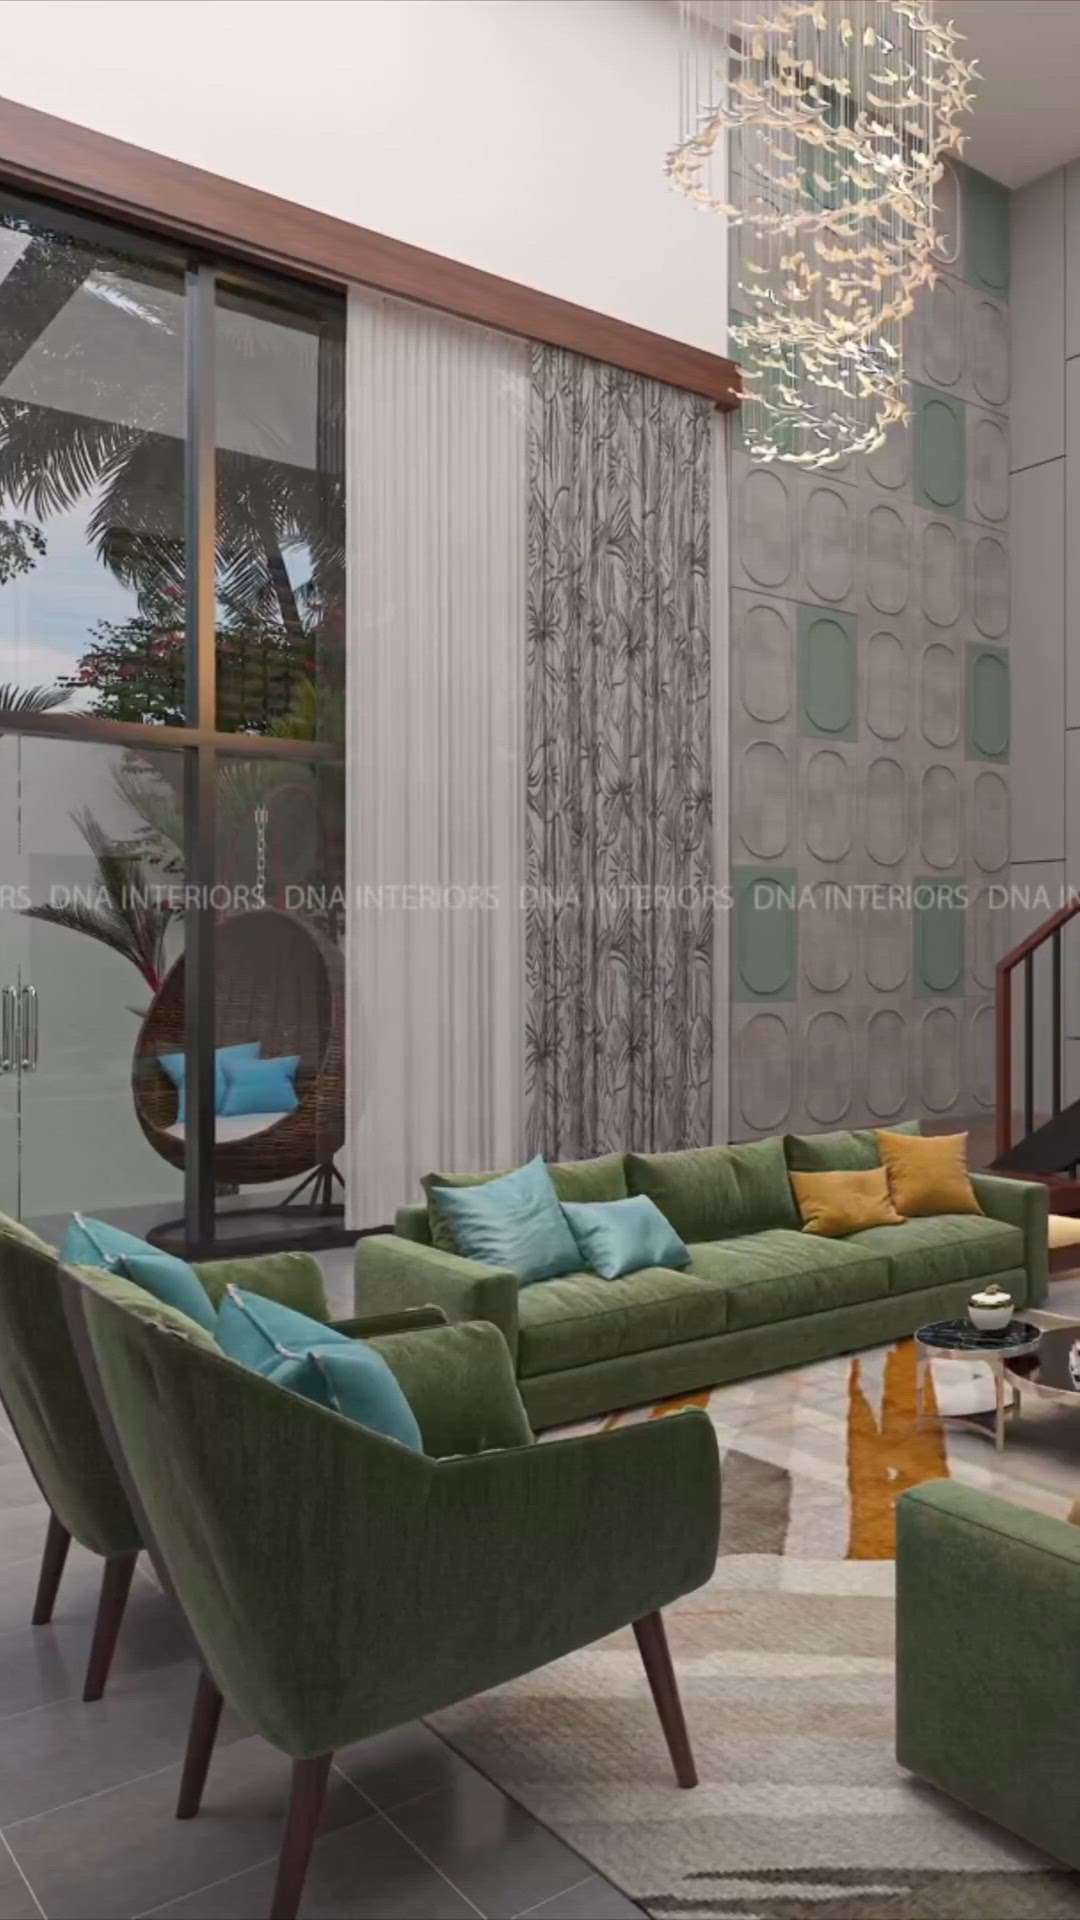 Living ✨✨
•Design & visualization by @dna__interiors_

•For enquiries DM

Or contact us: +91 7907174341
 : +91 8891646126

•For high quality

+3Dmax 

#interiordesigner #interior #design
#designer #vray render #3dmax #kochi #kerala #keralainteriordesign #3drender #visualization #decor #render #cg #decor #decoration #art #dining #diningroomdecor #ernakulam #kerala #design #kerala#ernakulam#kochi#
#modern #luxury #luxurydesign #interiors #interiordecoratinginspiration